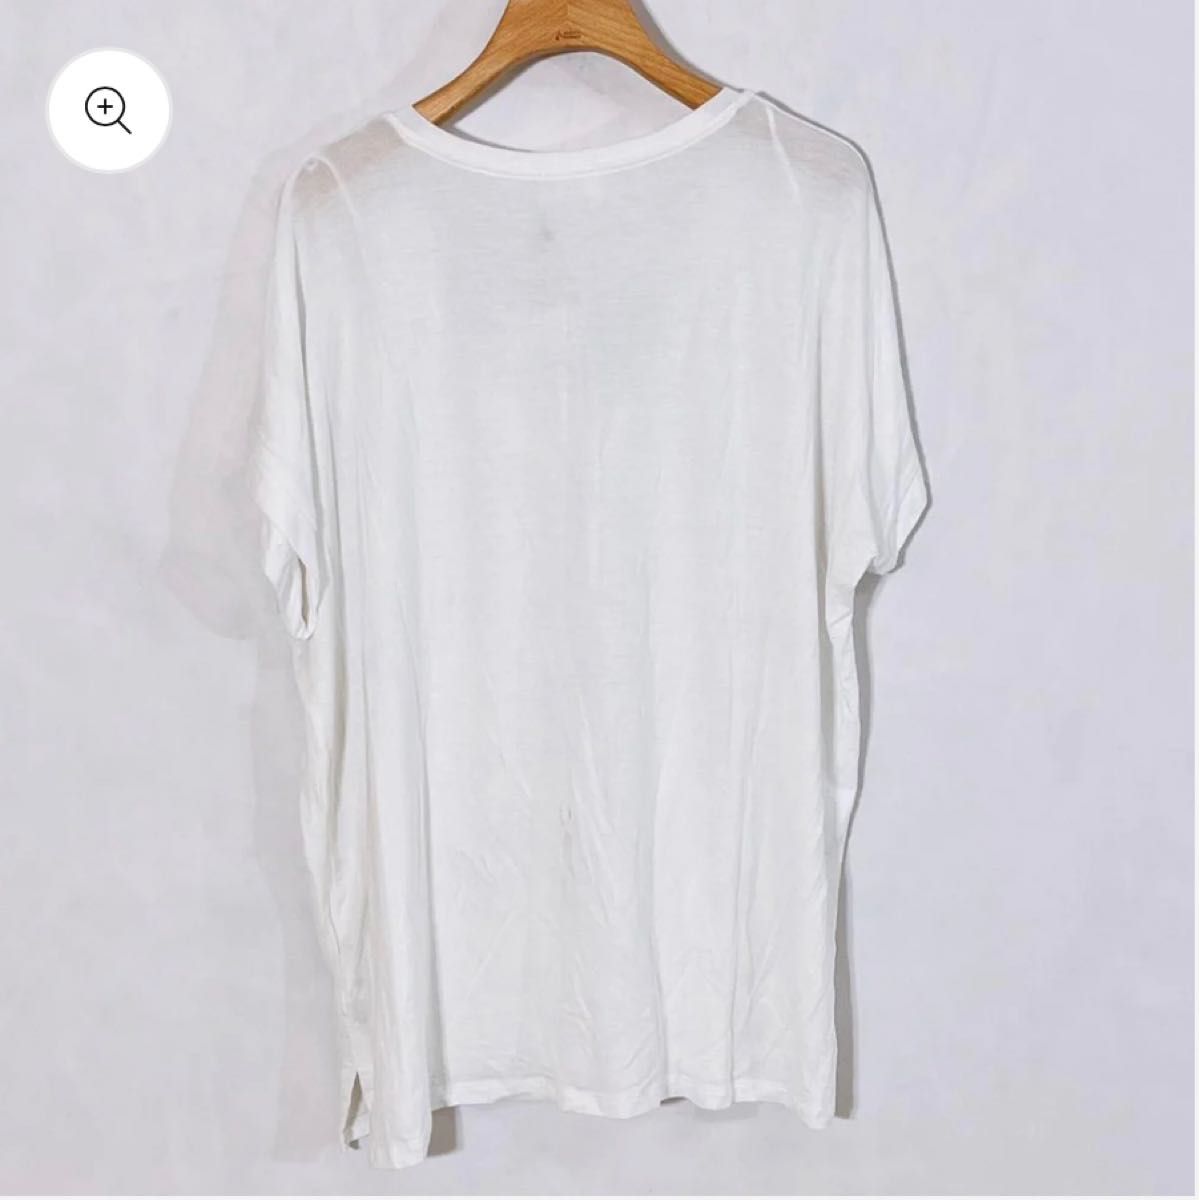 ZARATRF ザラ Tシャツ M ホワイト シンプル 半袖 無地 カジュアル お出かけ用 普段用 新古品 タグ付き レディース